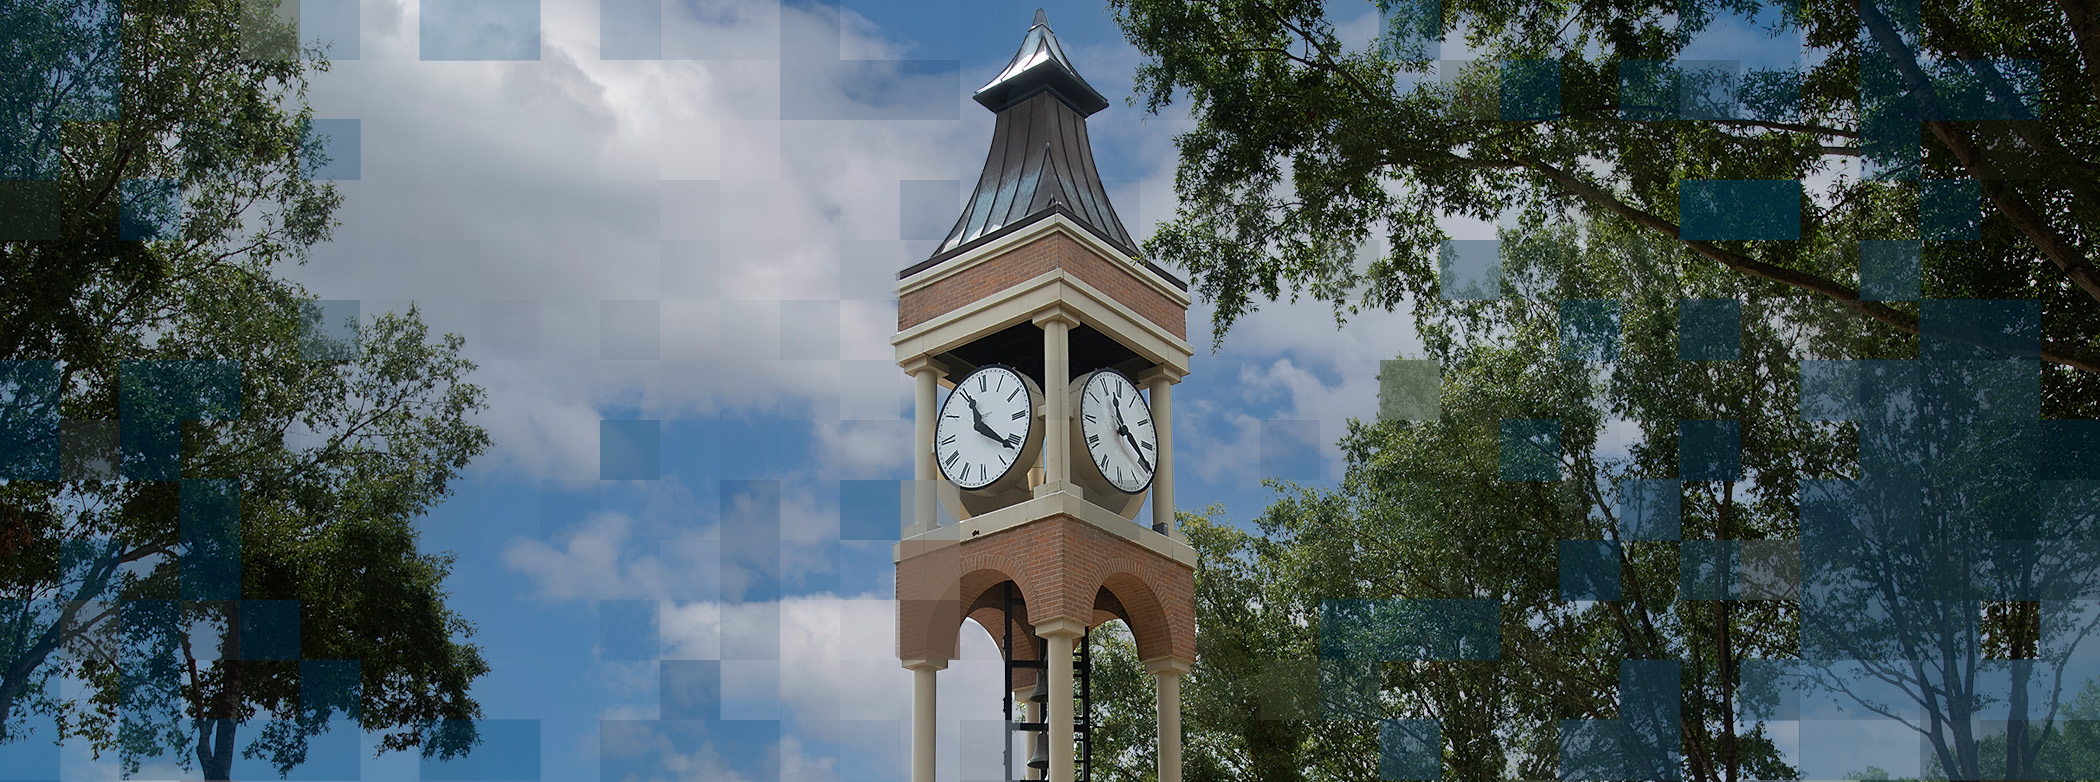 Clocktower on the campus of Sam Houston State University.